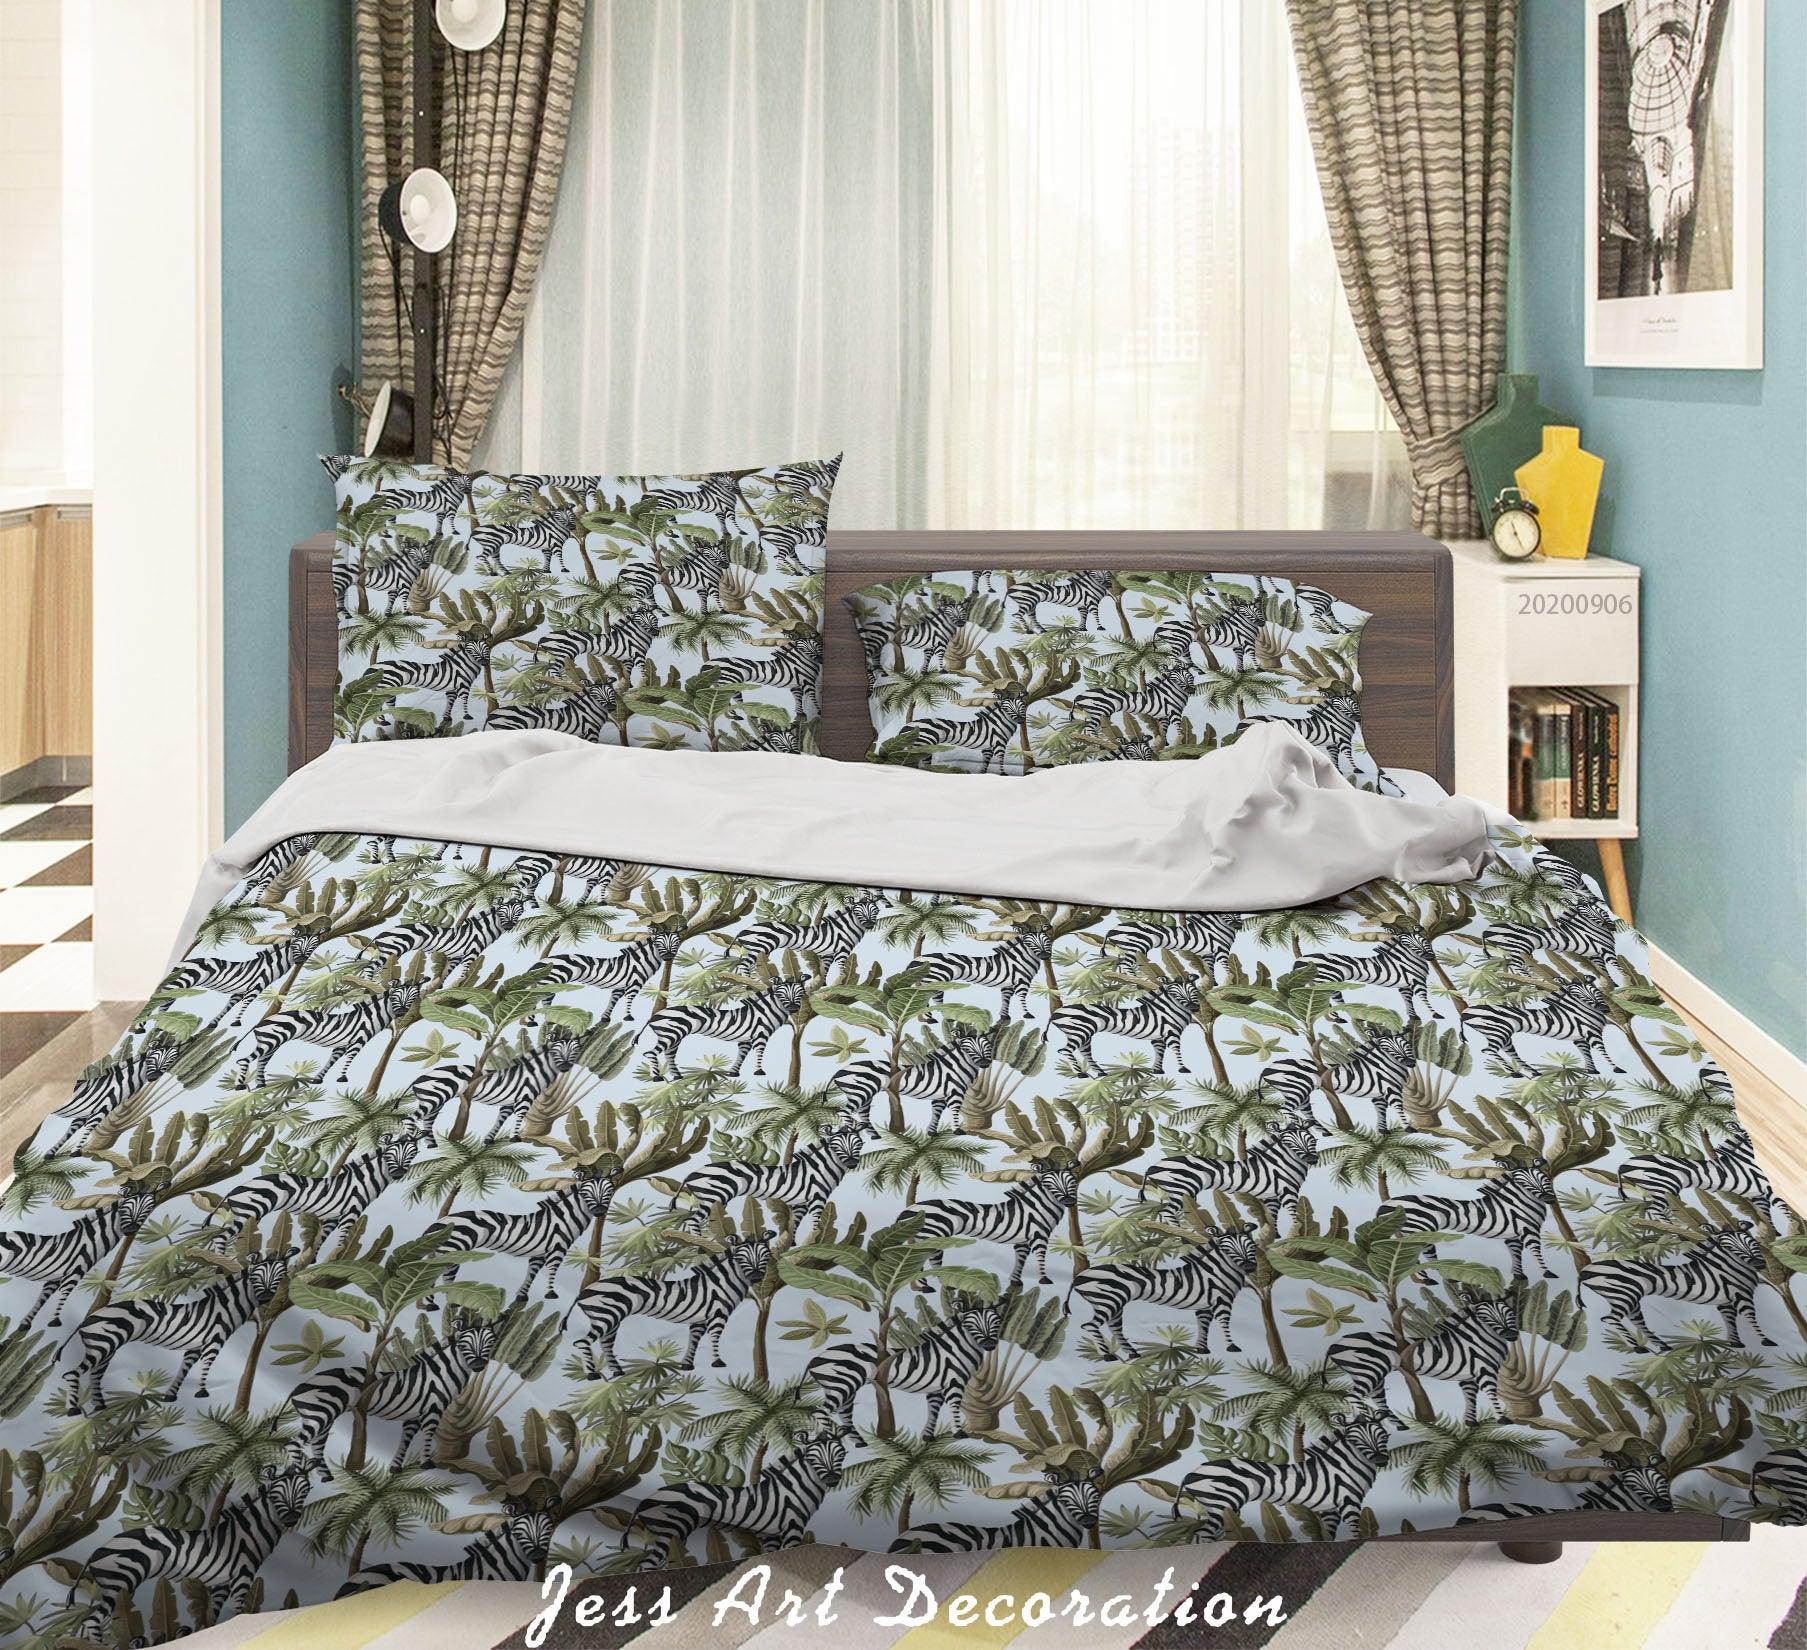 3D Vintage Leaves Zebra Floral Pattern Quilt Cover Set Bedding Set Duvet Cover Pillowcases WJ 3657- Jess Art Decoration